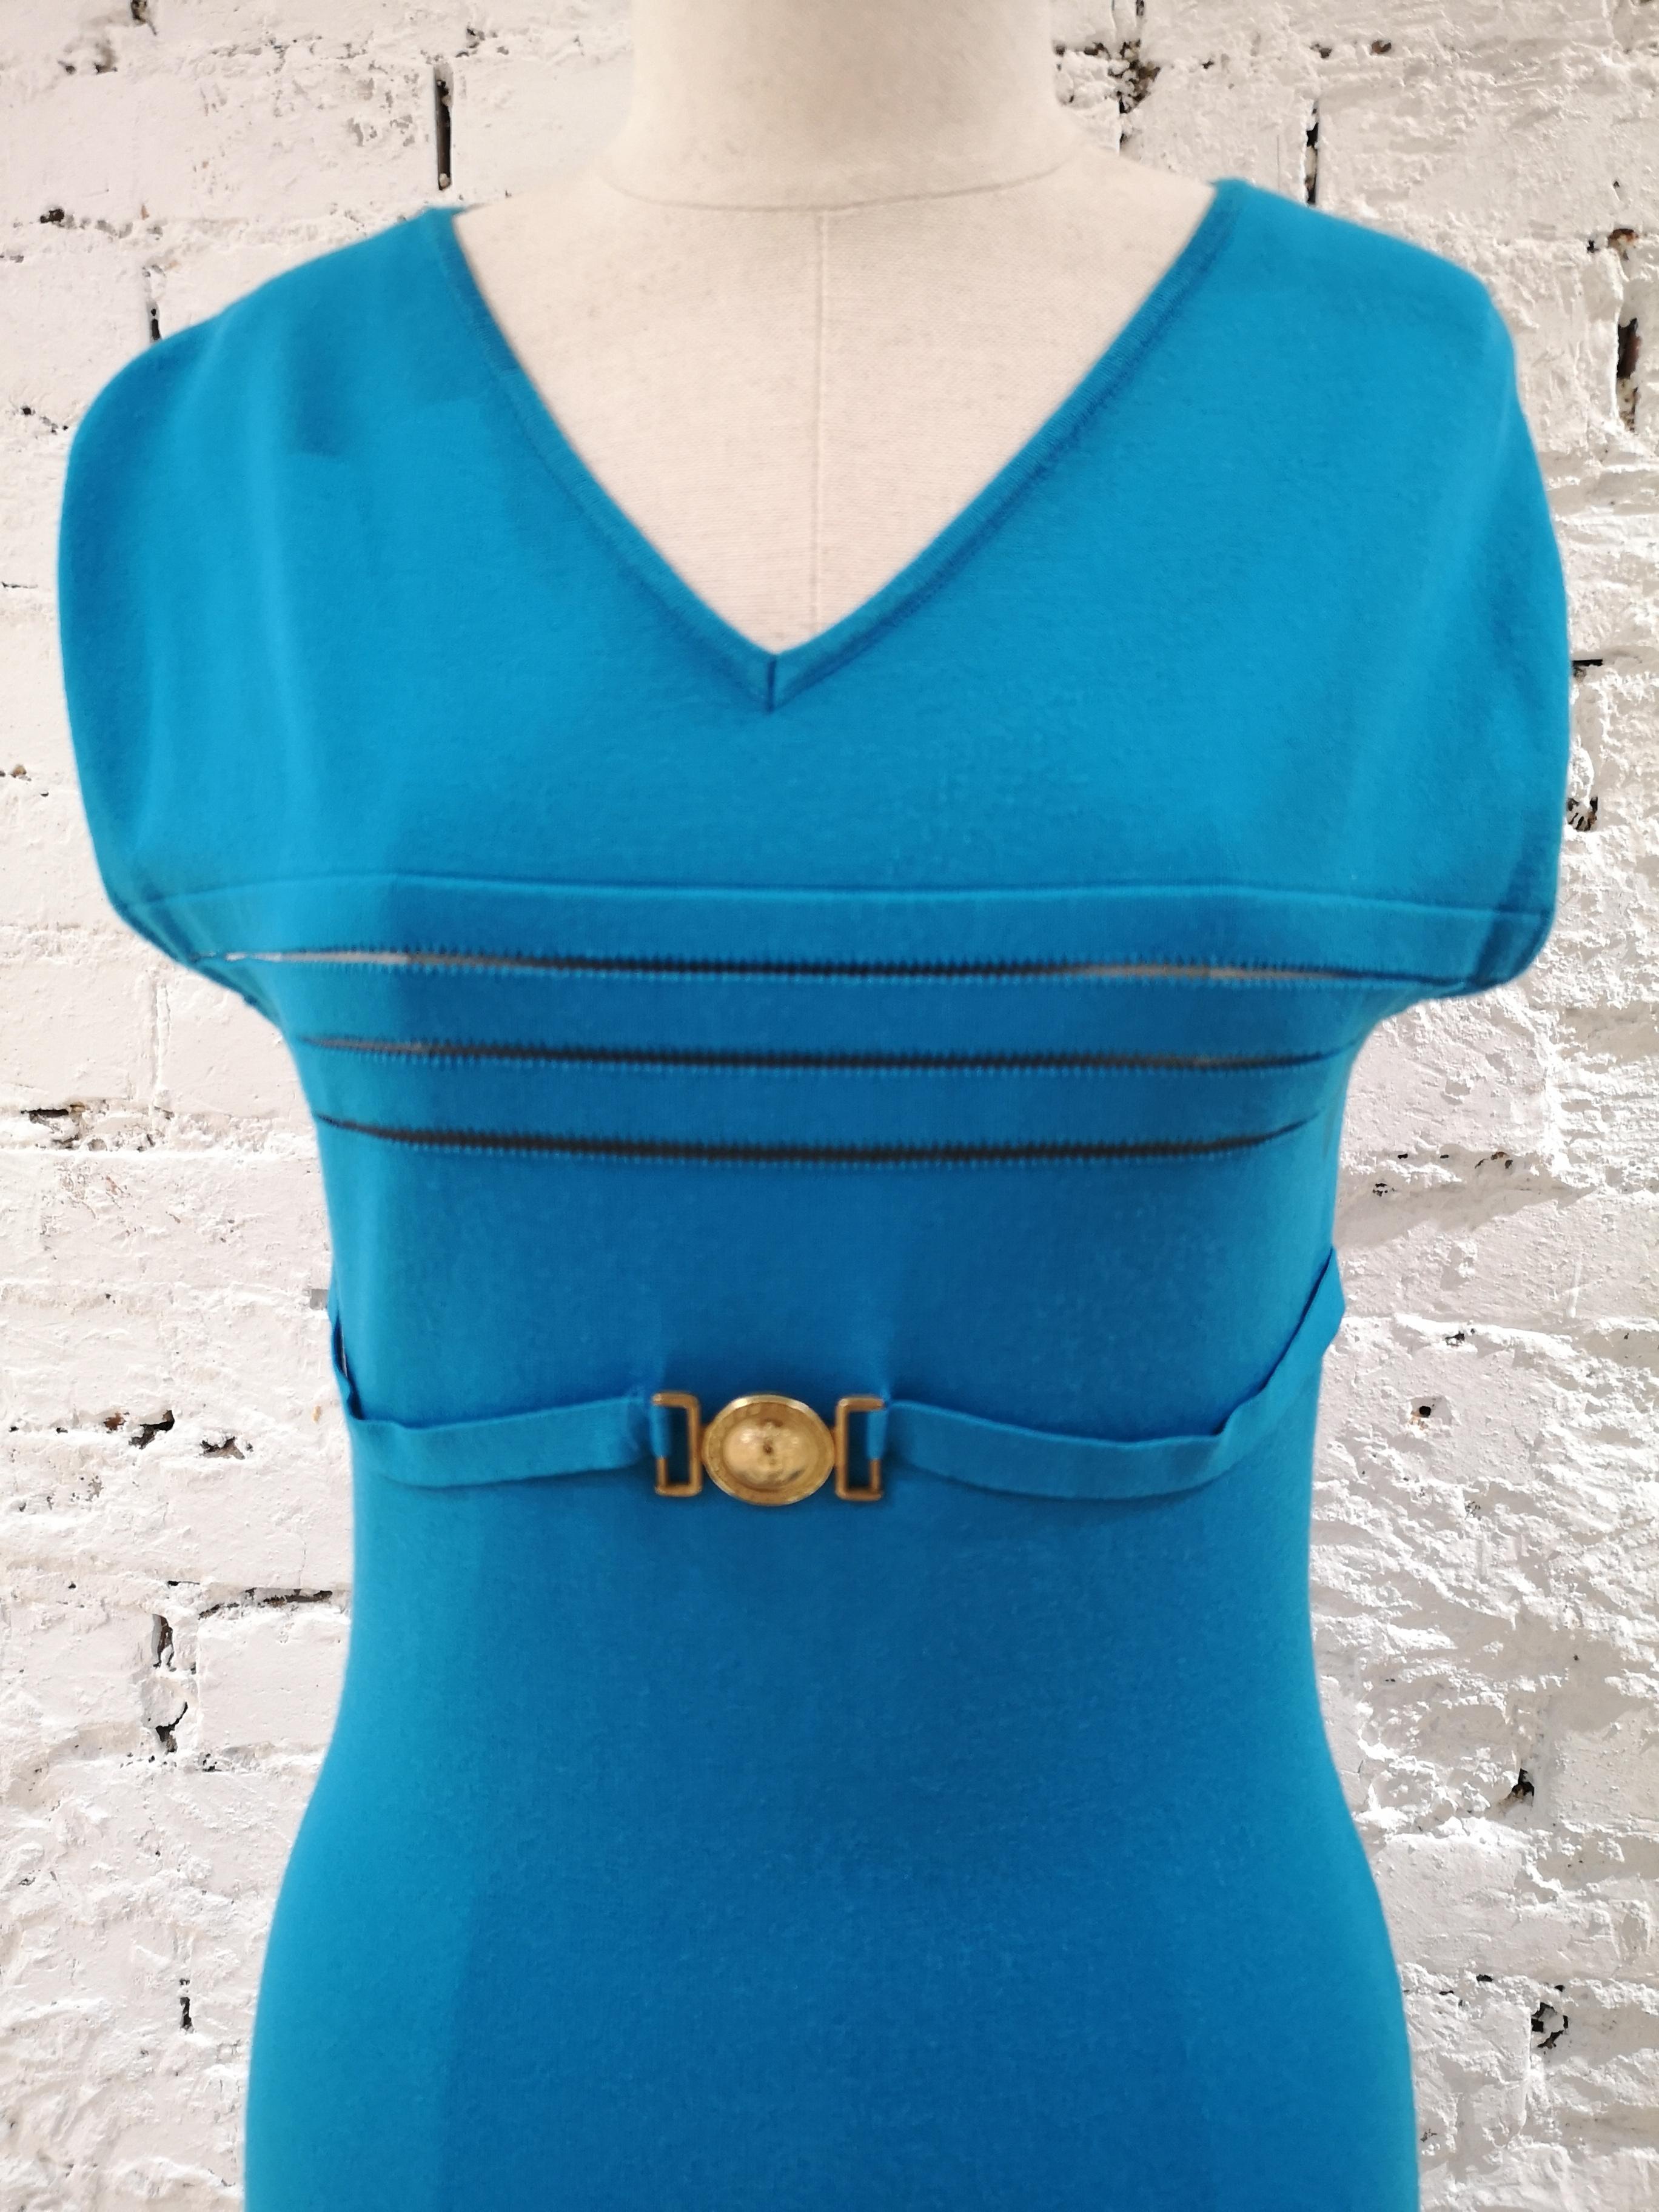 Versace Collecction Blue Dress NWOT 6